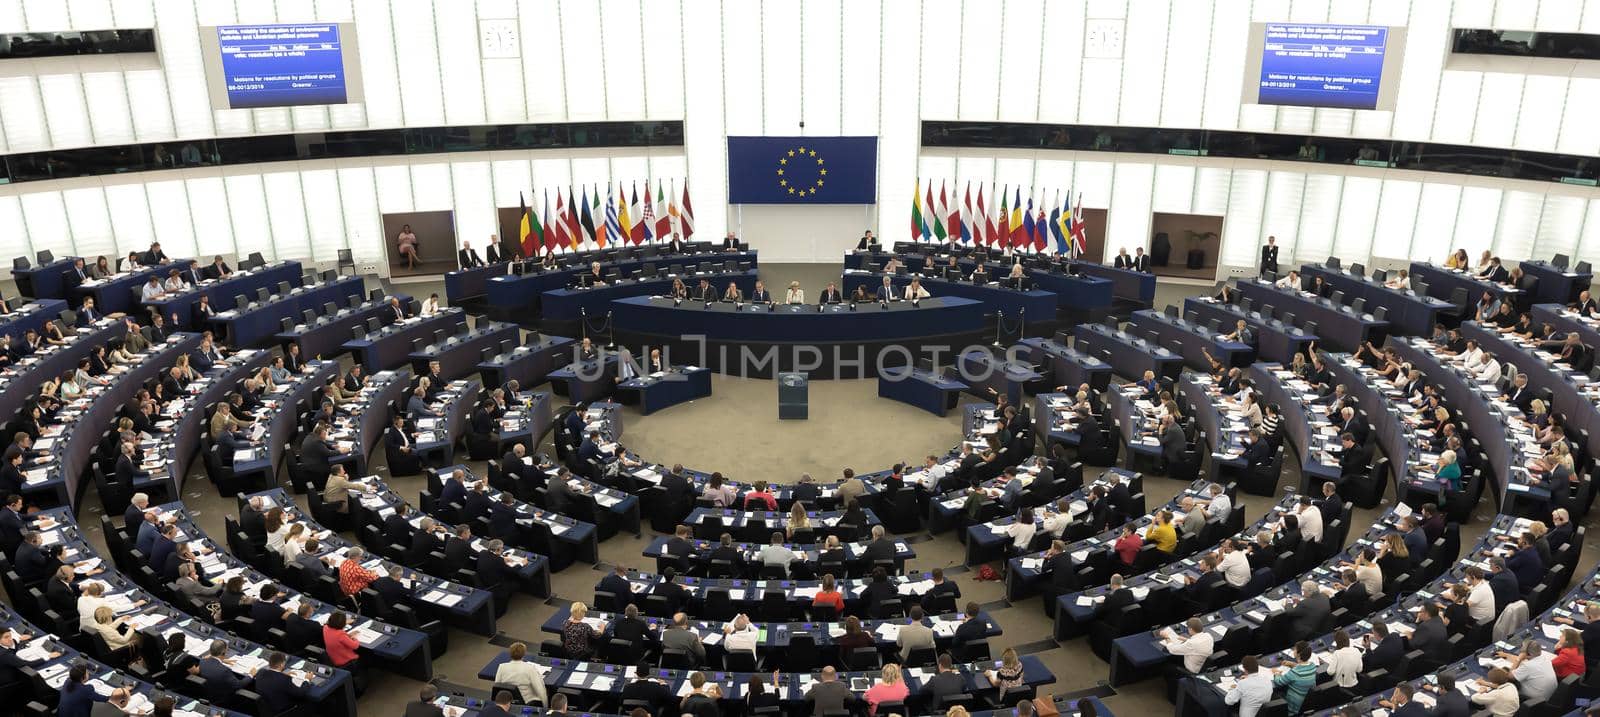 Plenary room of the European Parliament by palinchak